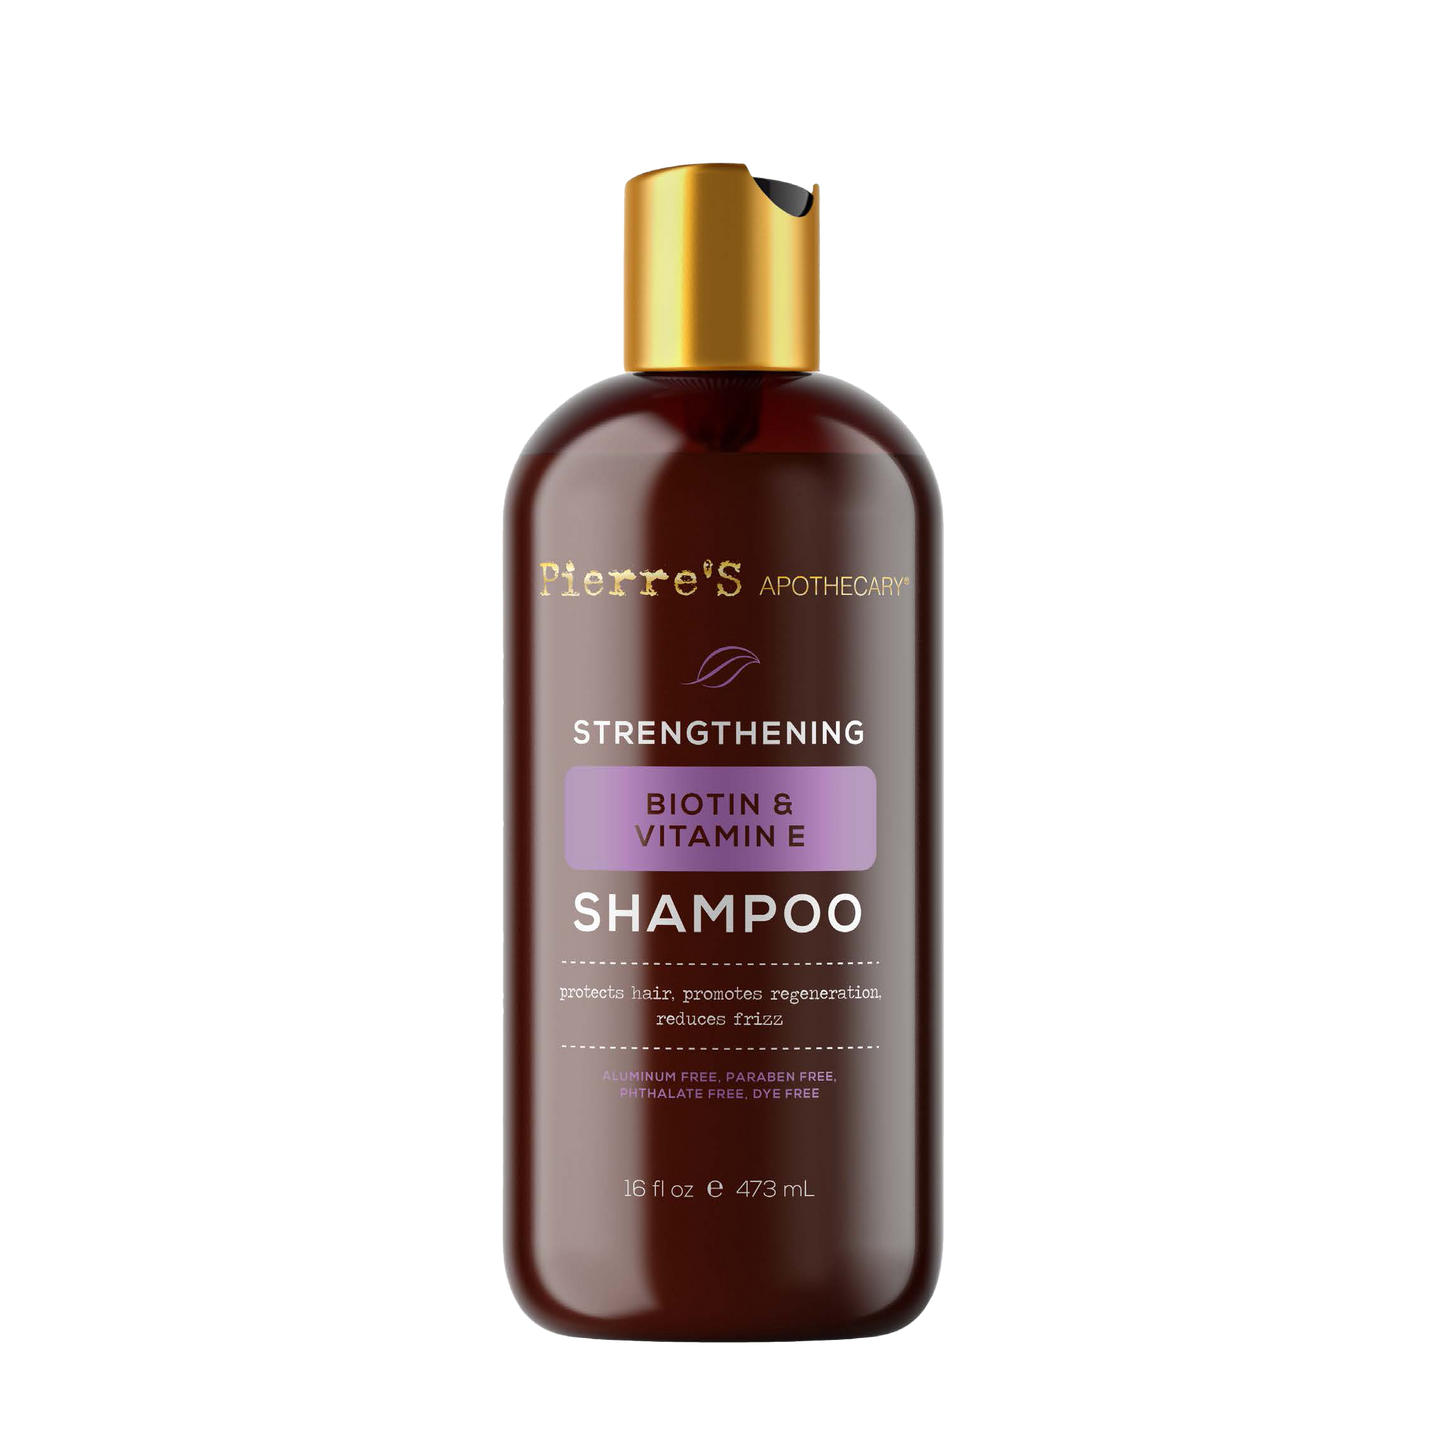 Strengthening Shampoo with Biotin & Vitamin E